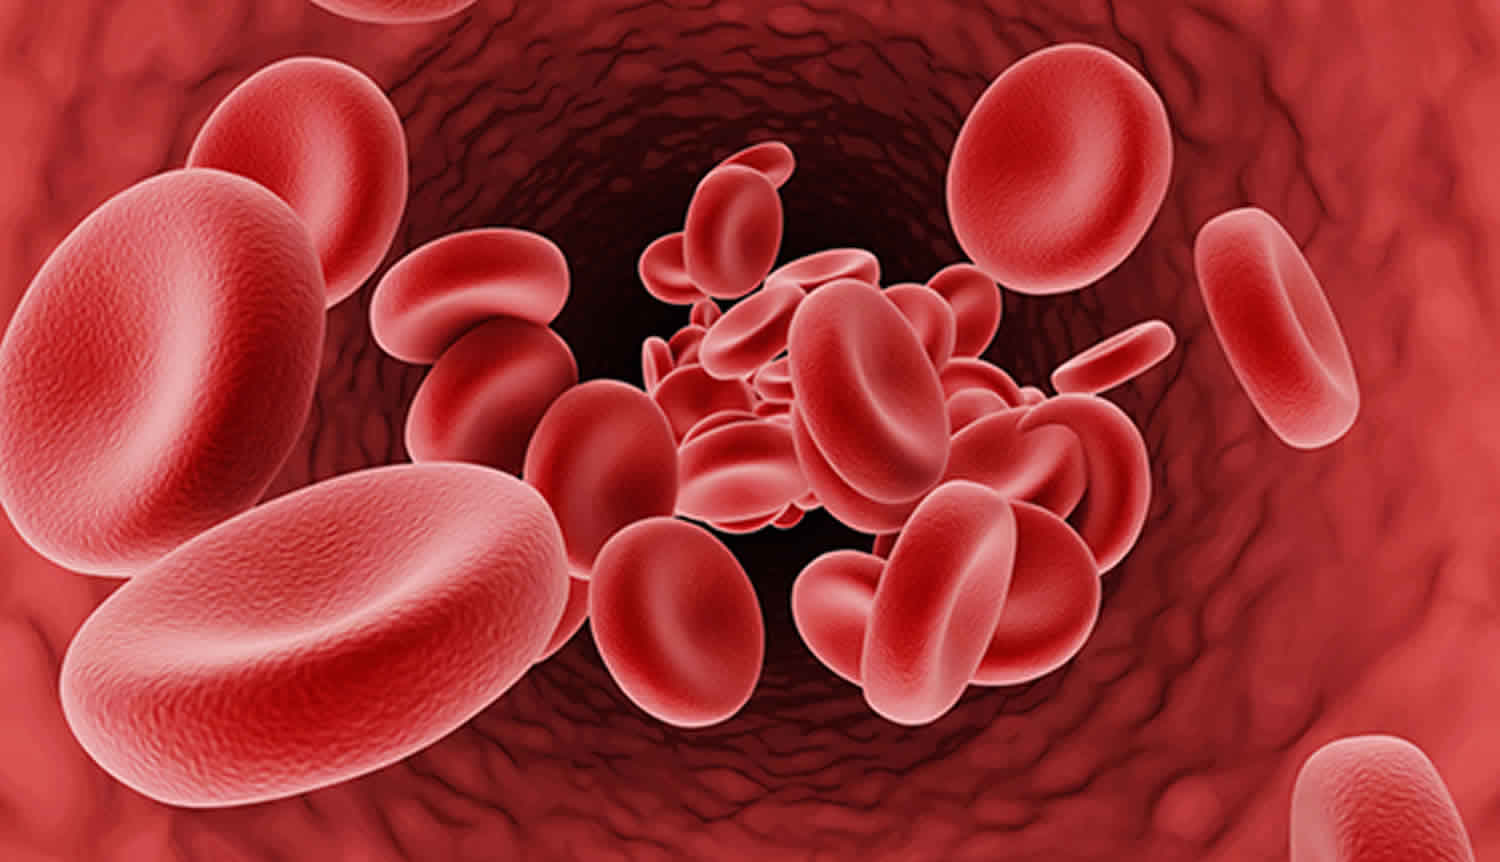 beta-thalassemia